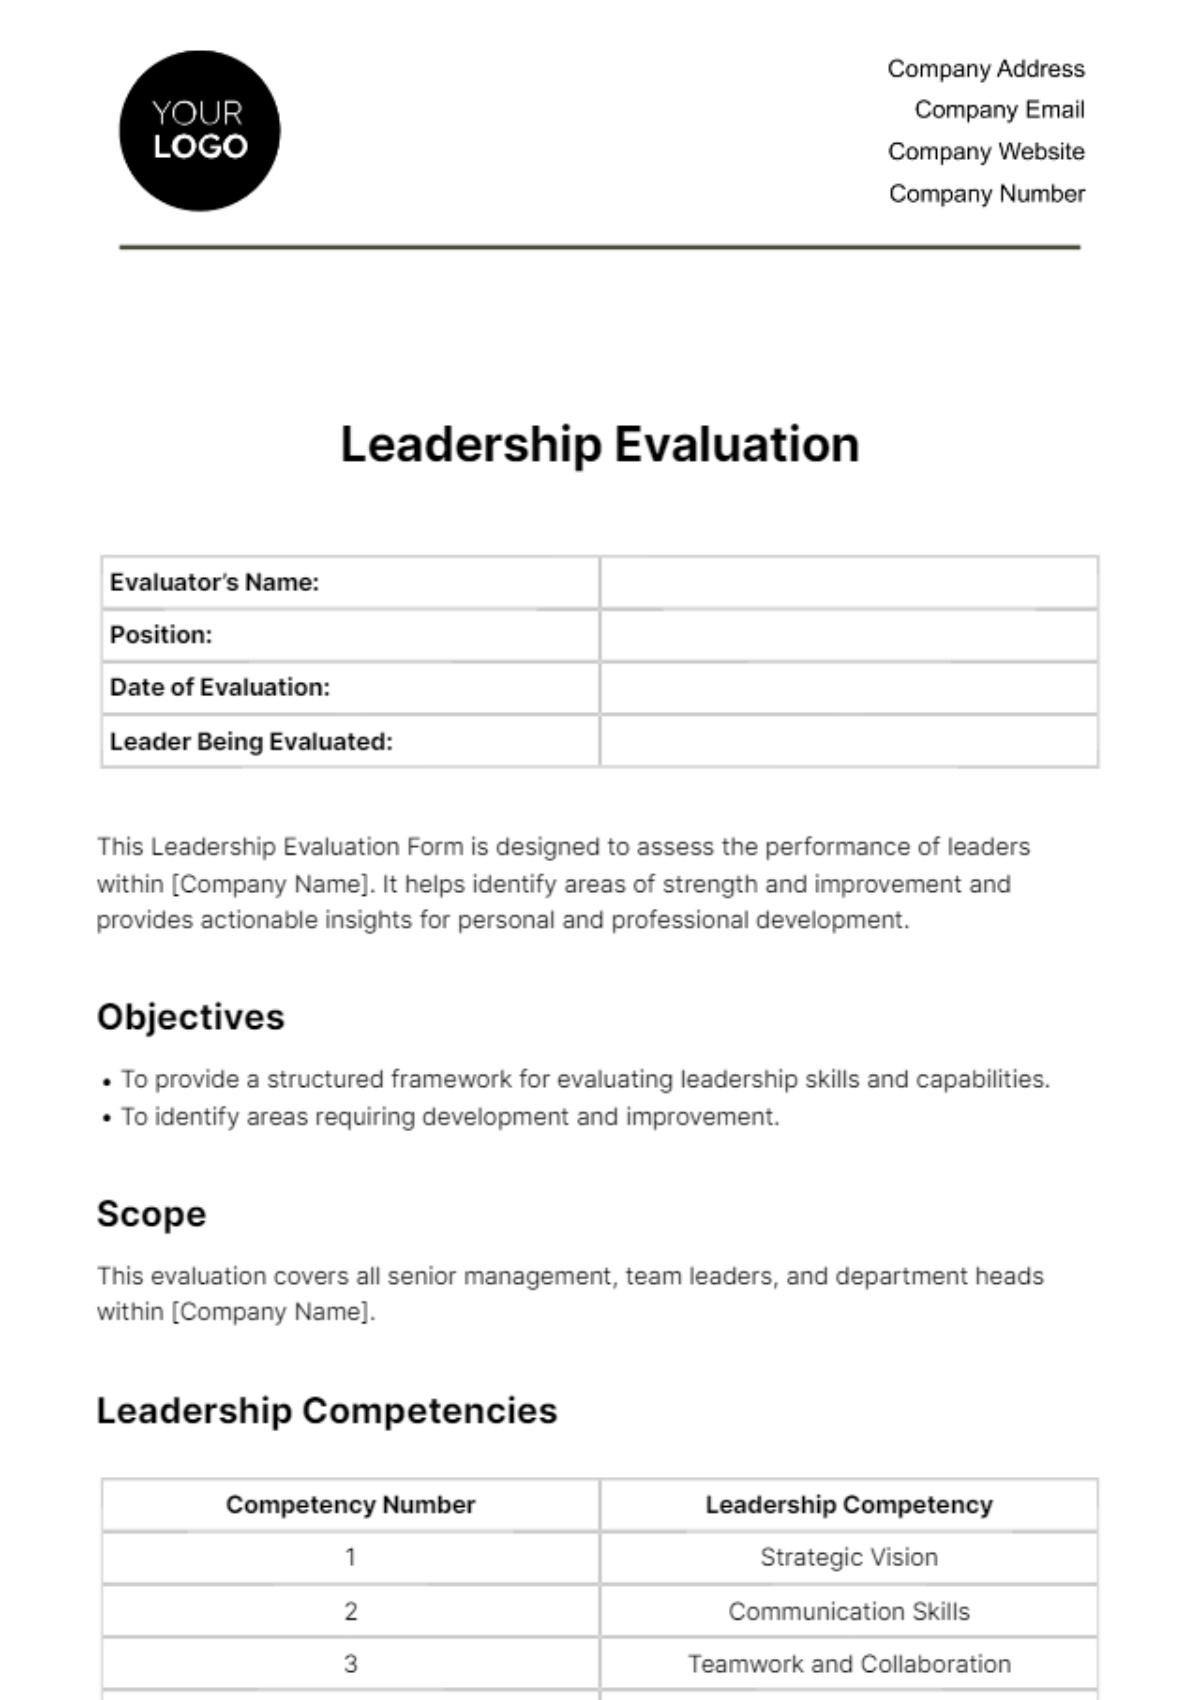 Free Leadership Evaluation HR Template